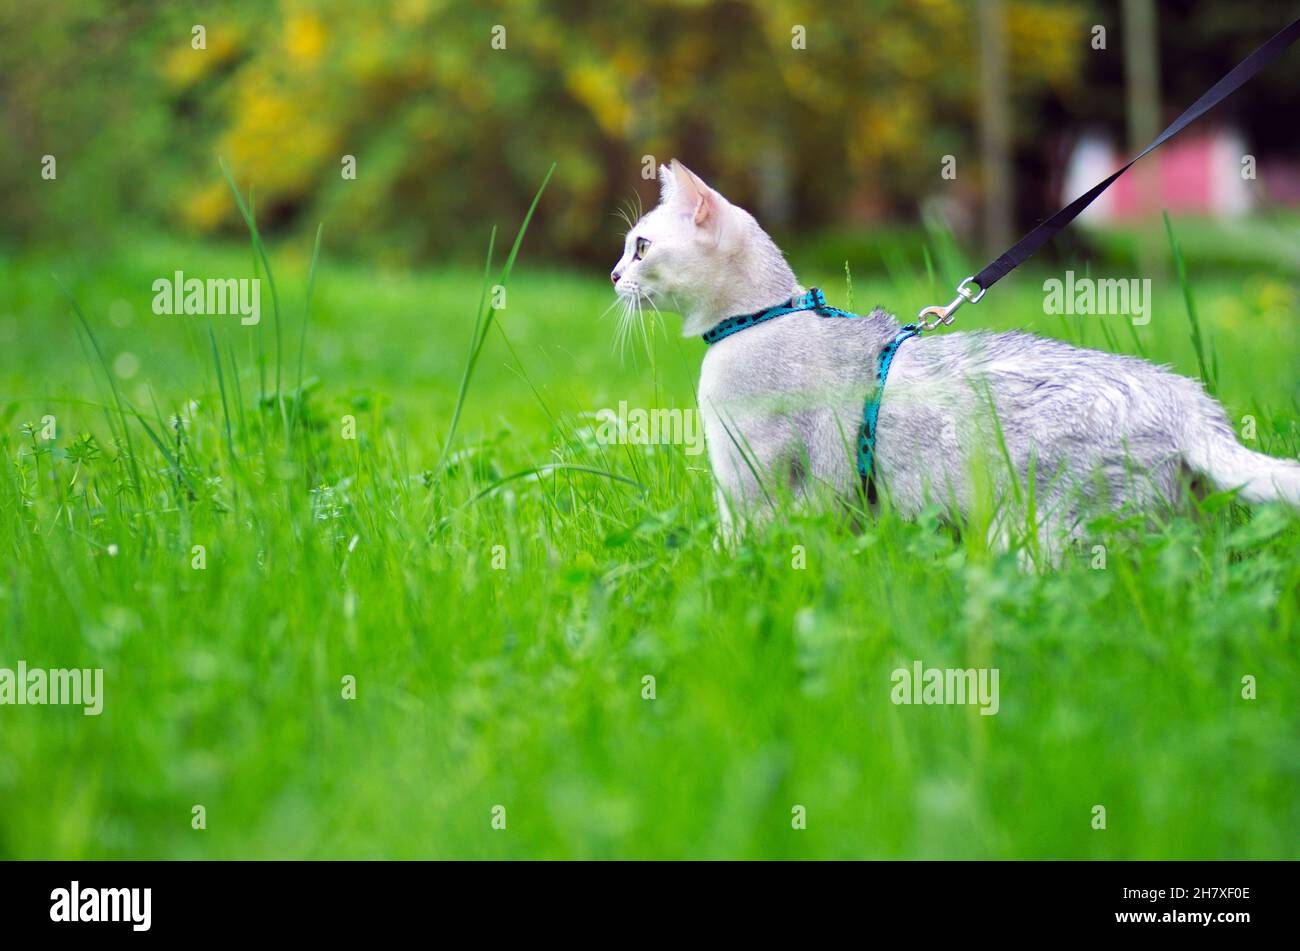 Burmilla cat on a leash Stock Photo